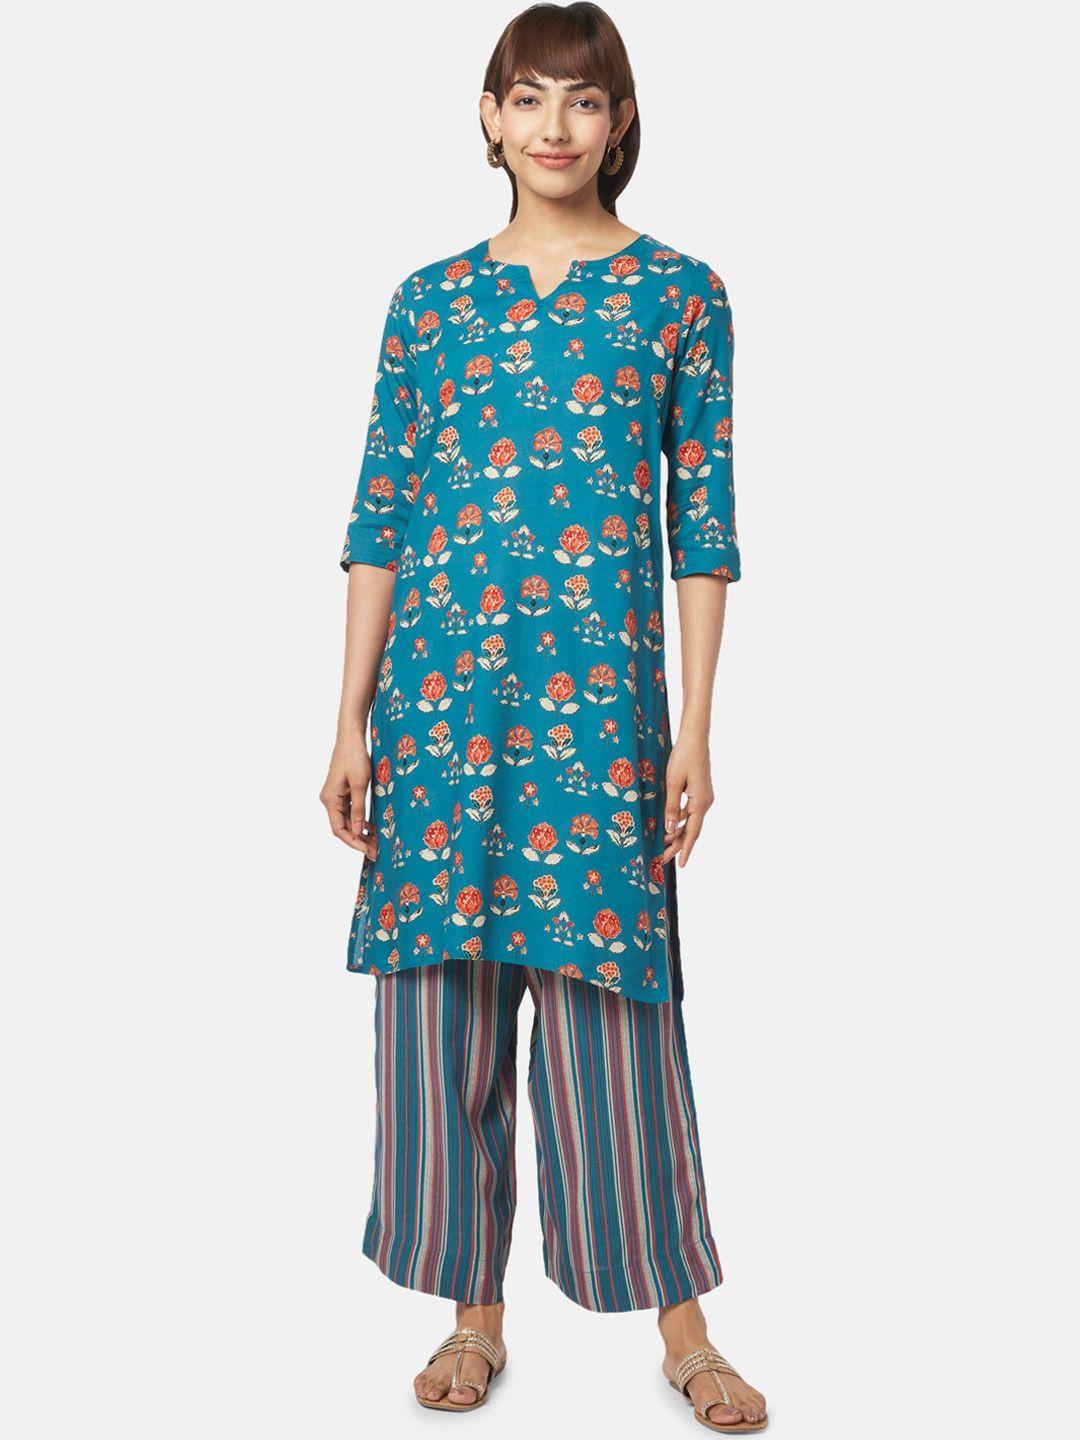 rangmanch by pantaloons floral printed round neck kurta with palazzos